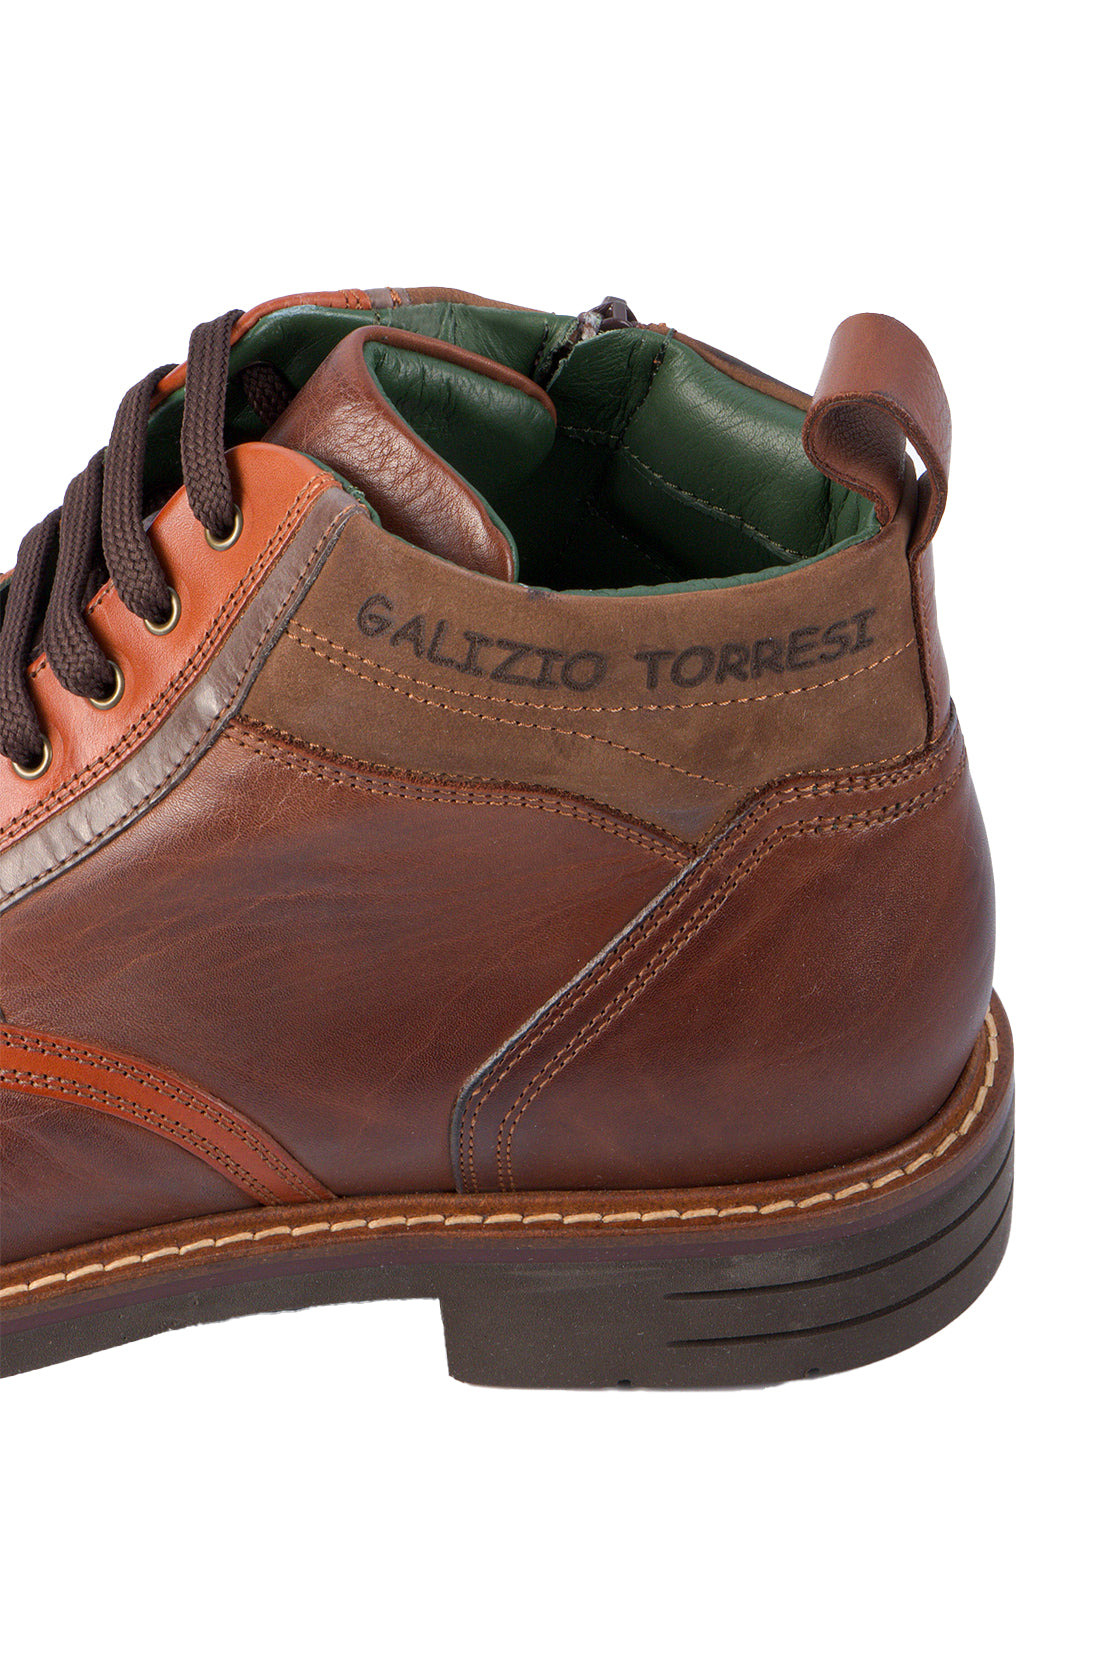 Galizio Torresi Lace Boots Nougat/Smoke